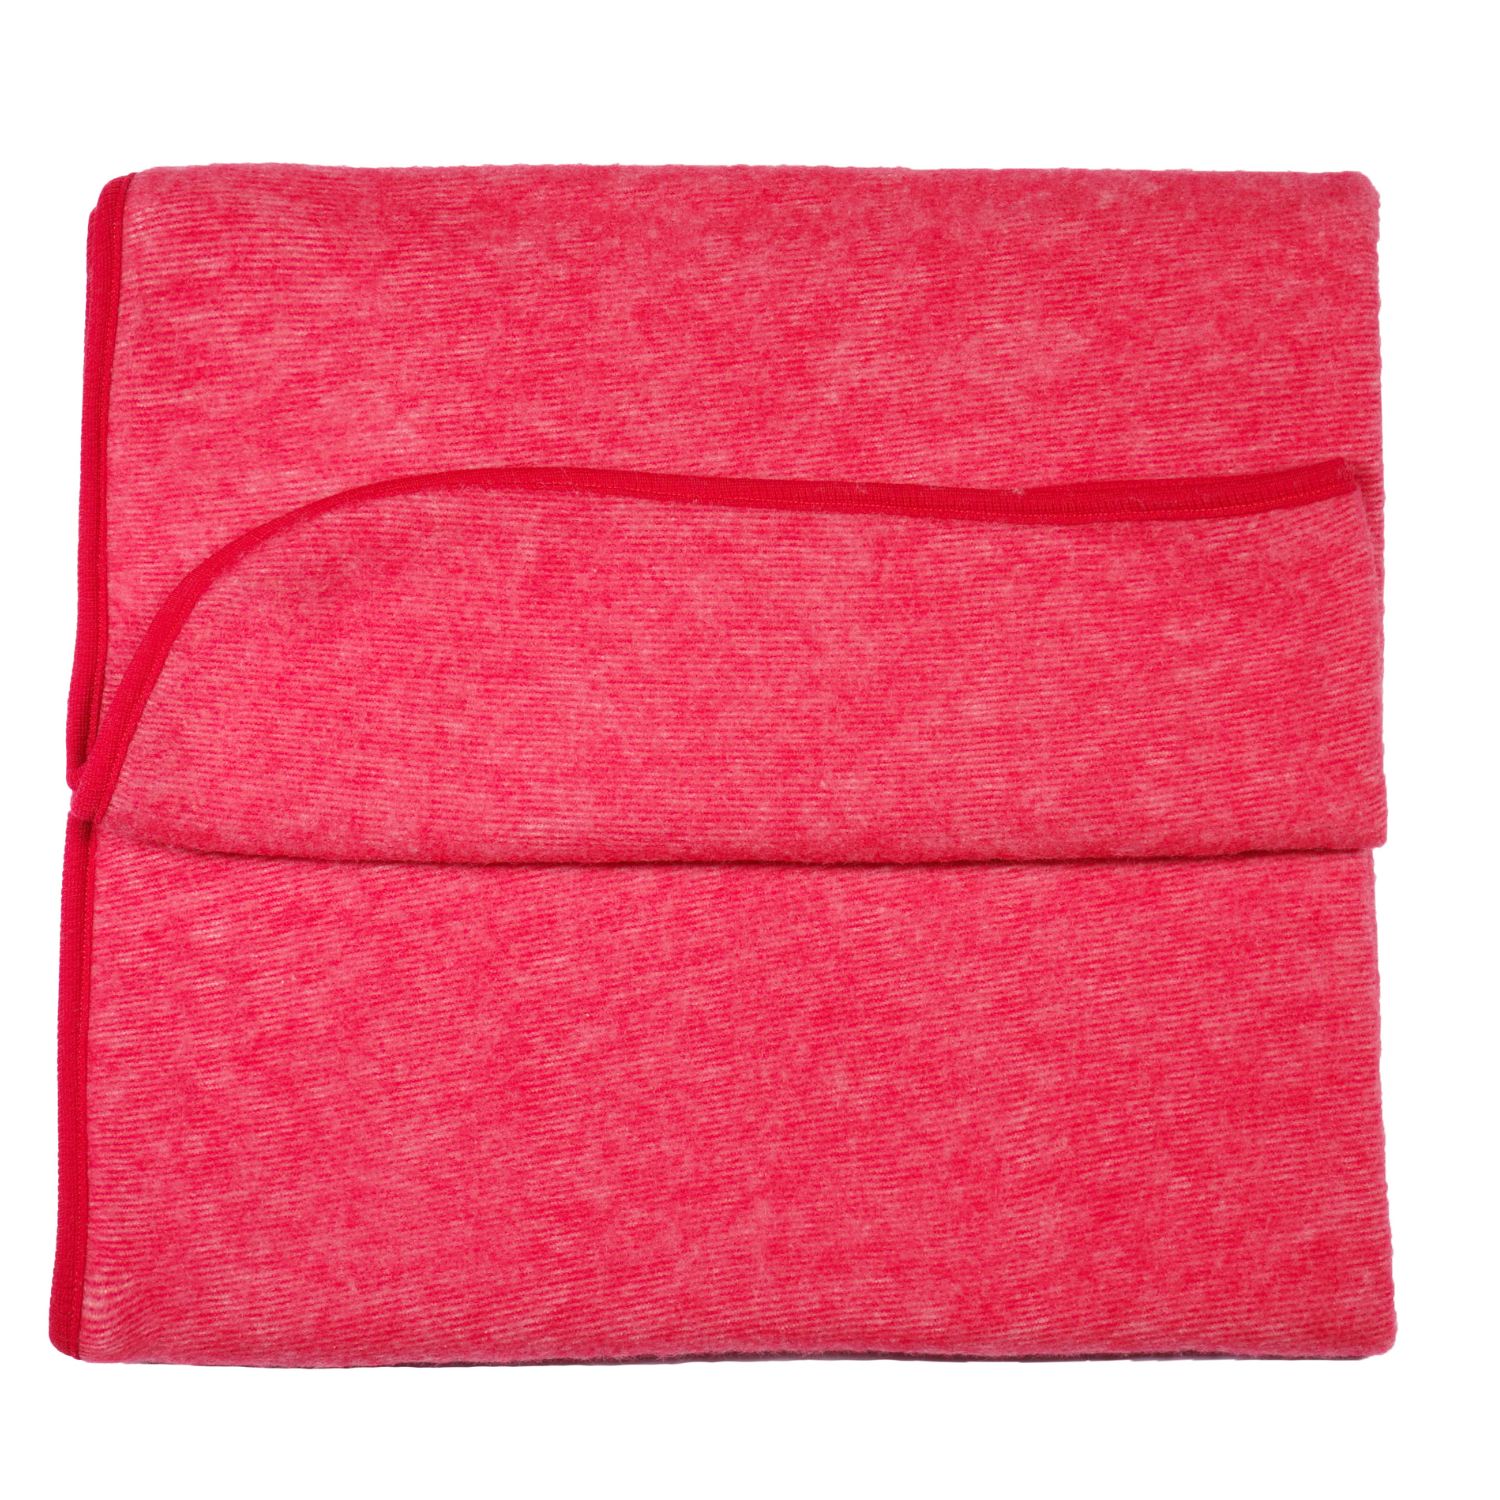 Cosilana baby blanket (wool/cotton fleece) (Colour: 104 red)